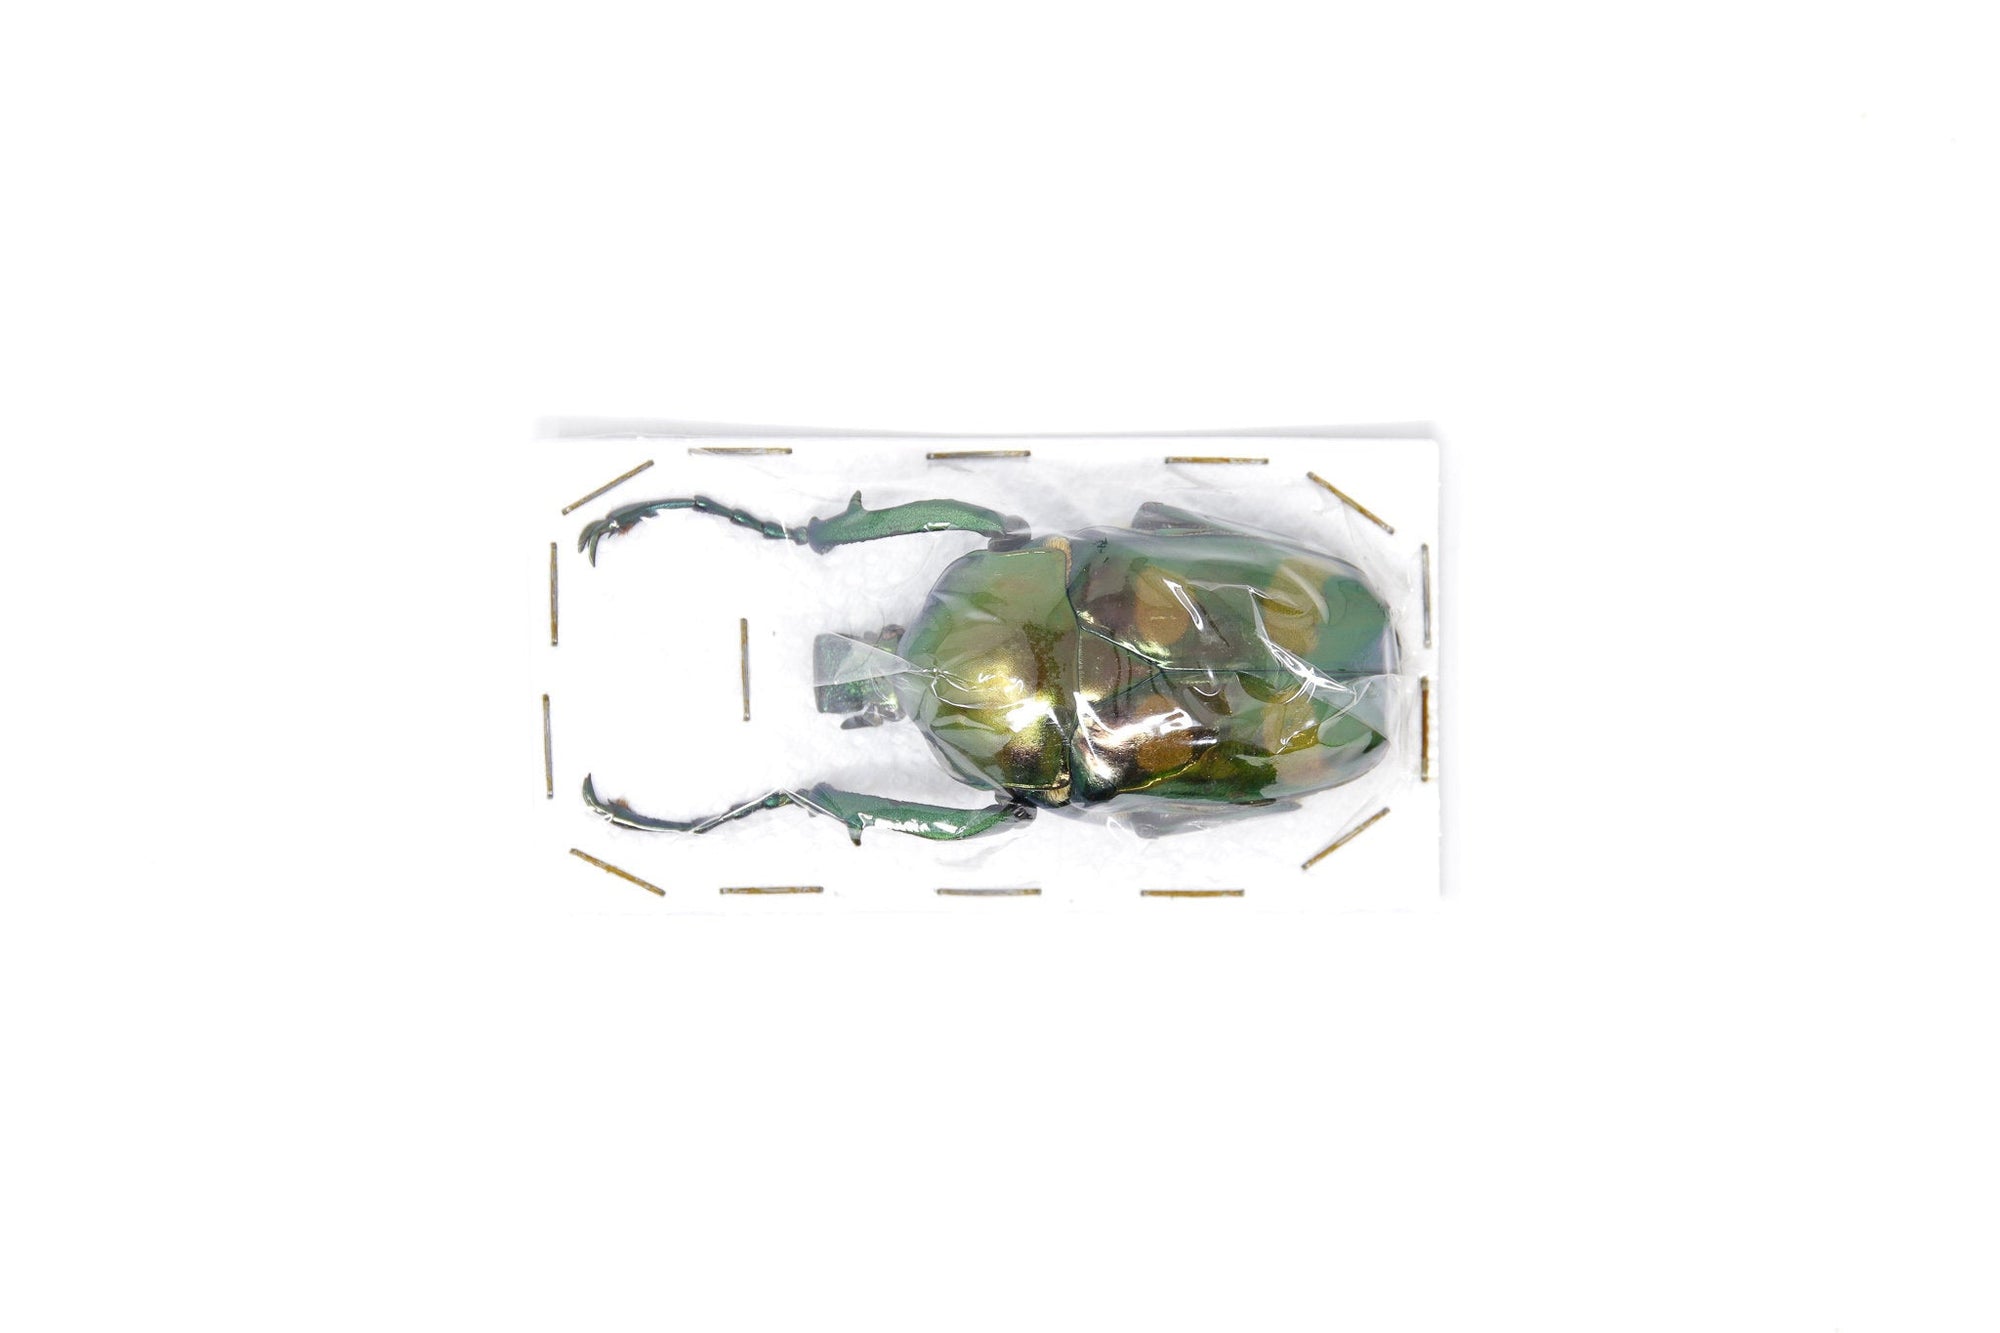 Jumnos ruckeri ruckeri 51.6mm A1 | Thailand Flower Beetle, Entomology Specimen